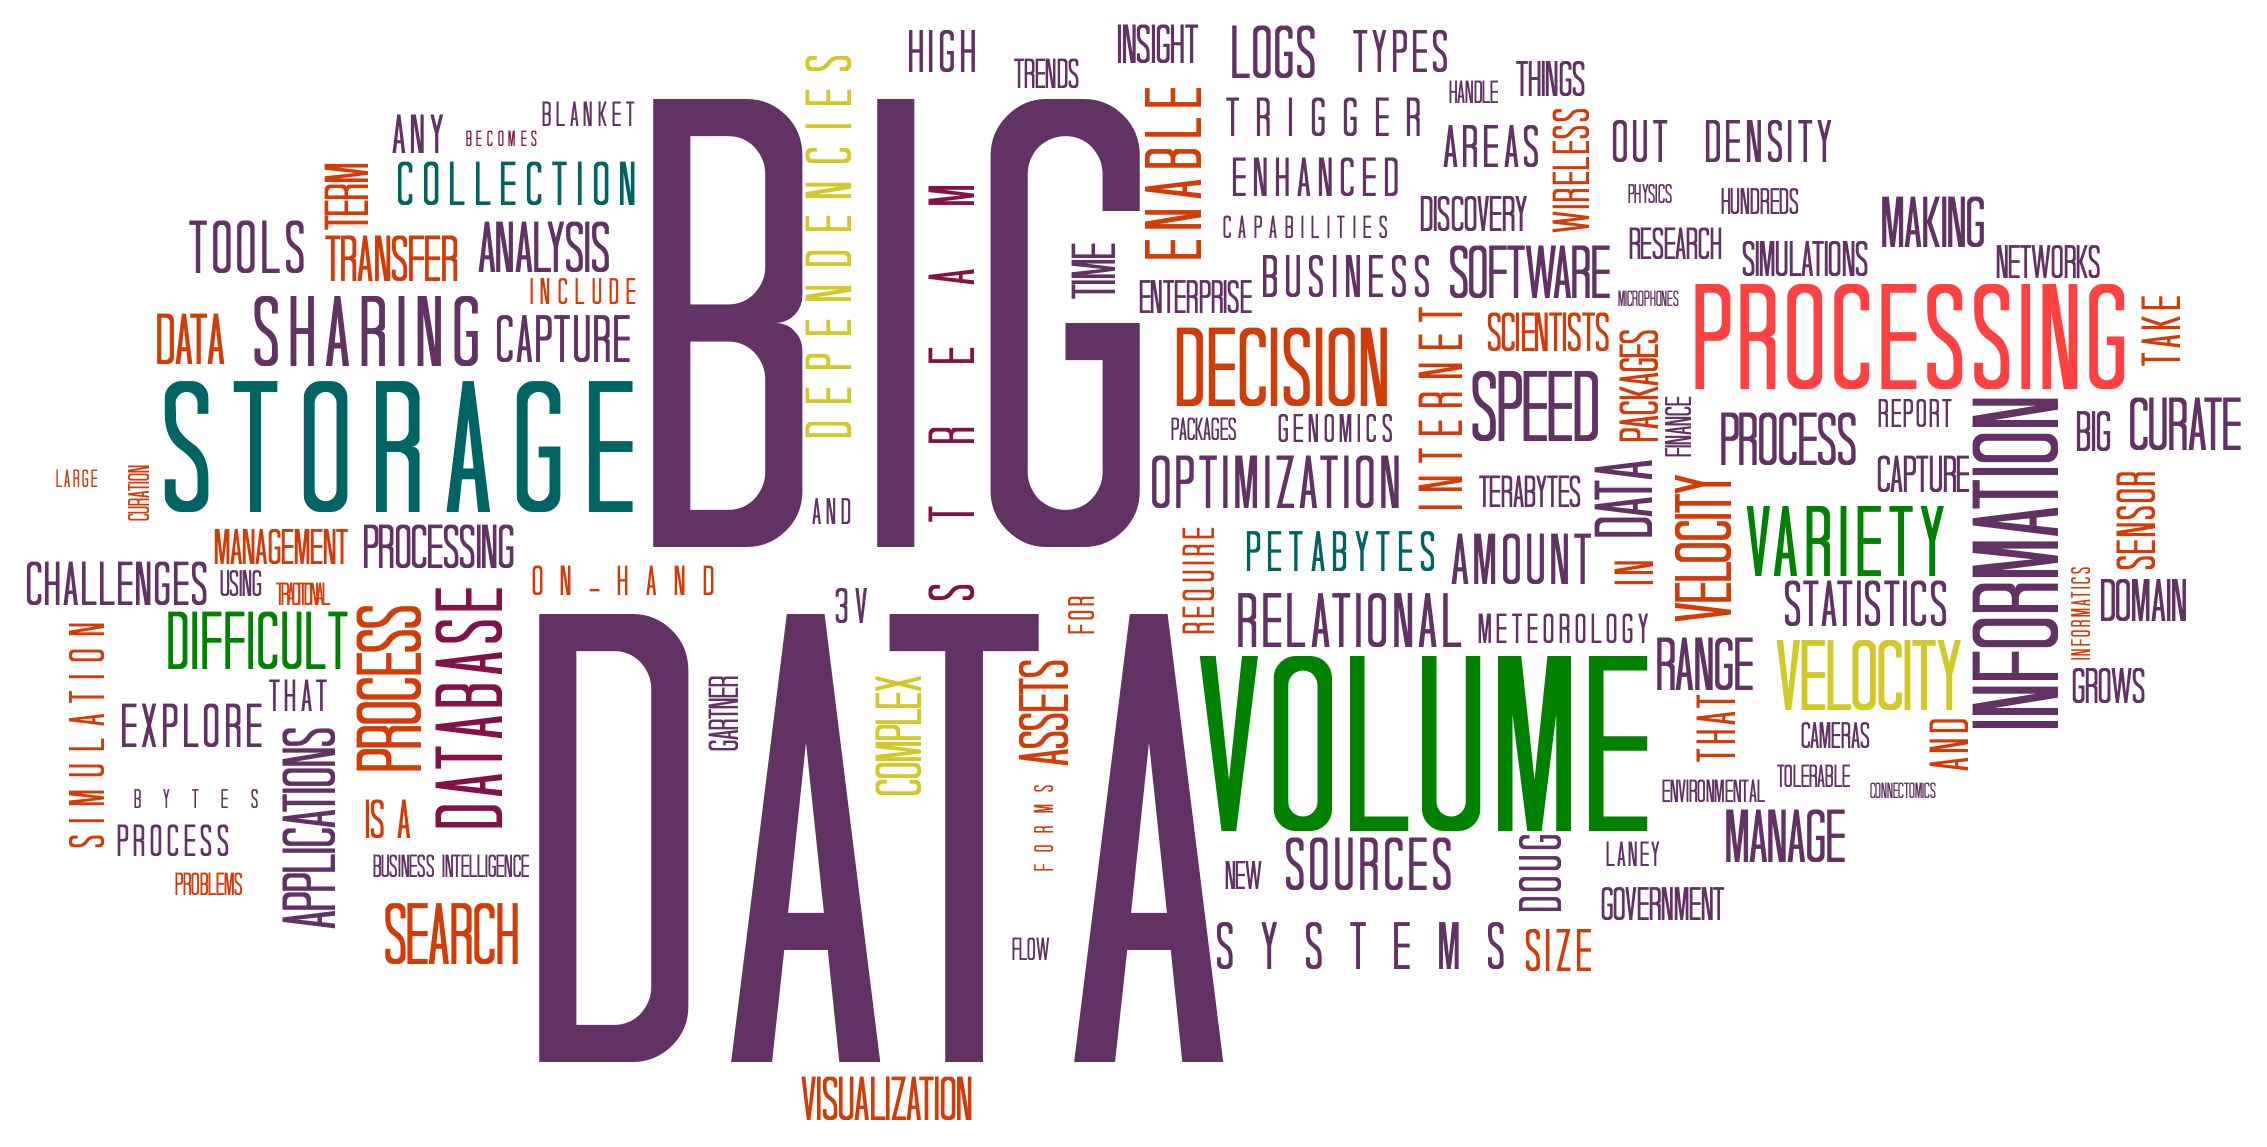 Enterprise Big-Data